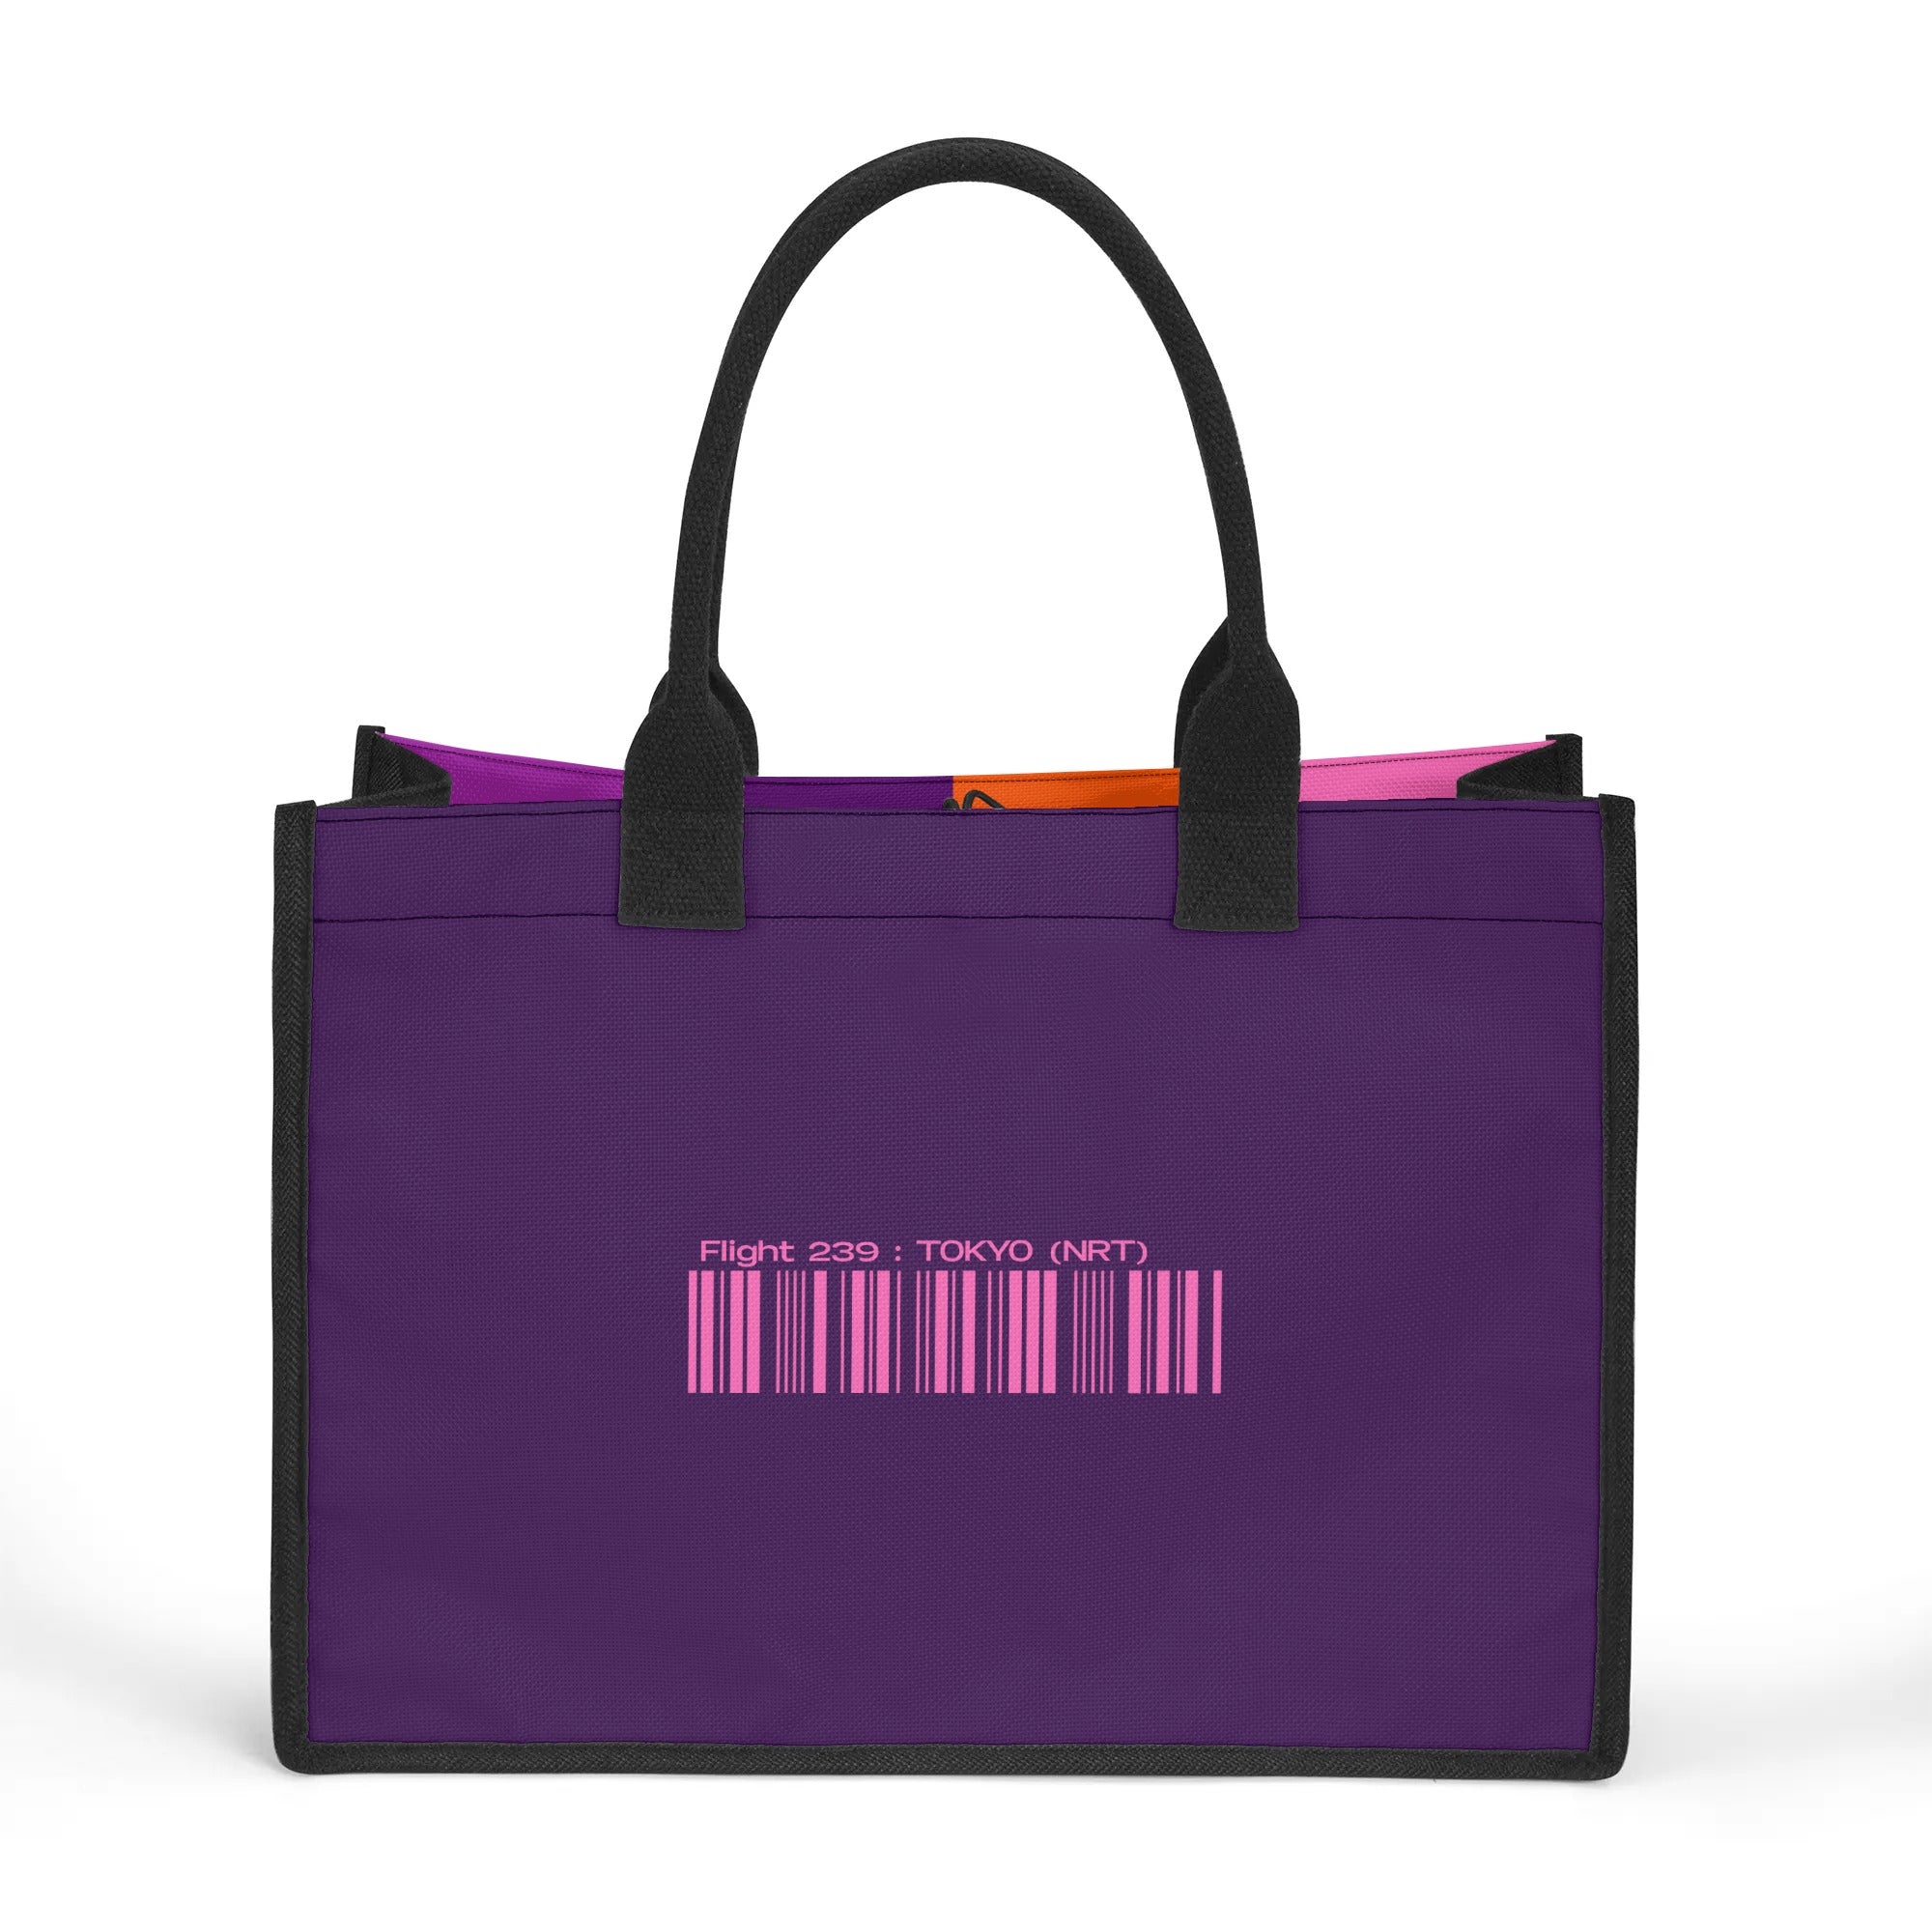 Color block tote bag Violet Purple Orange Pink Stripes Designer everyday shopper tote bold Contemporary design Blissfully Brand Tokyo NRT Airline Series